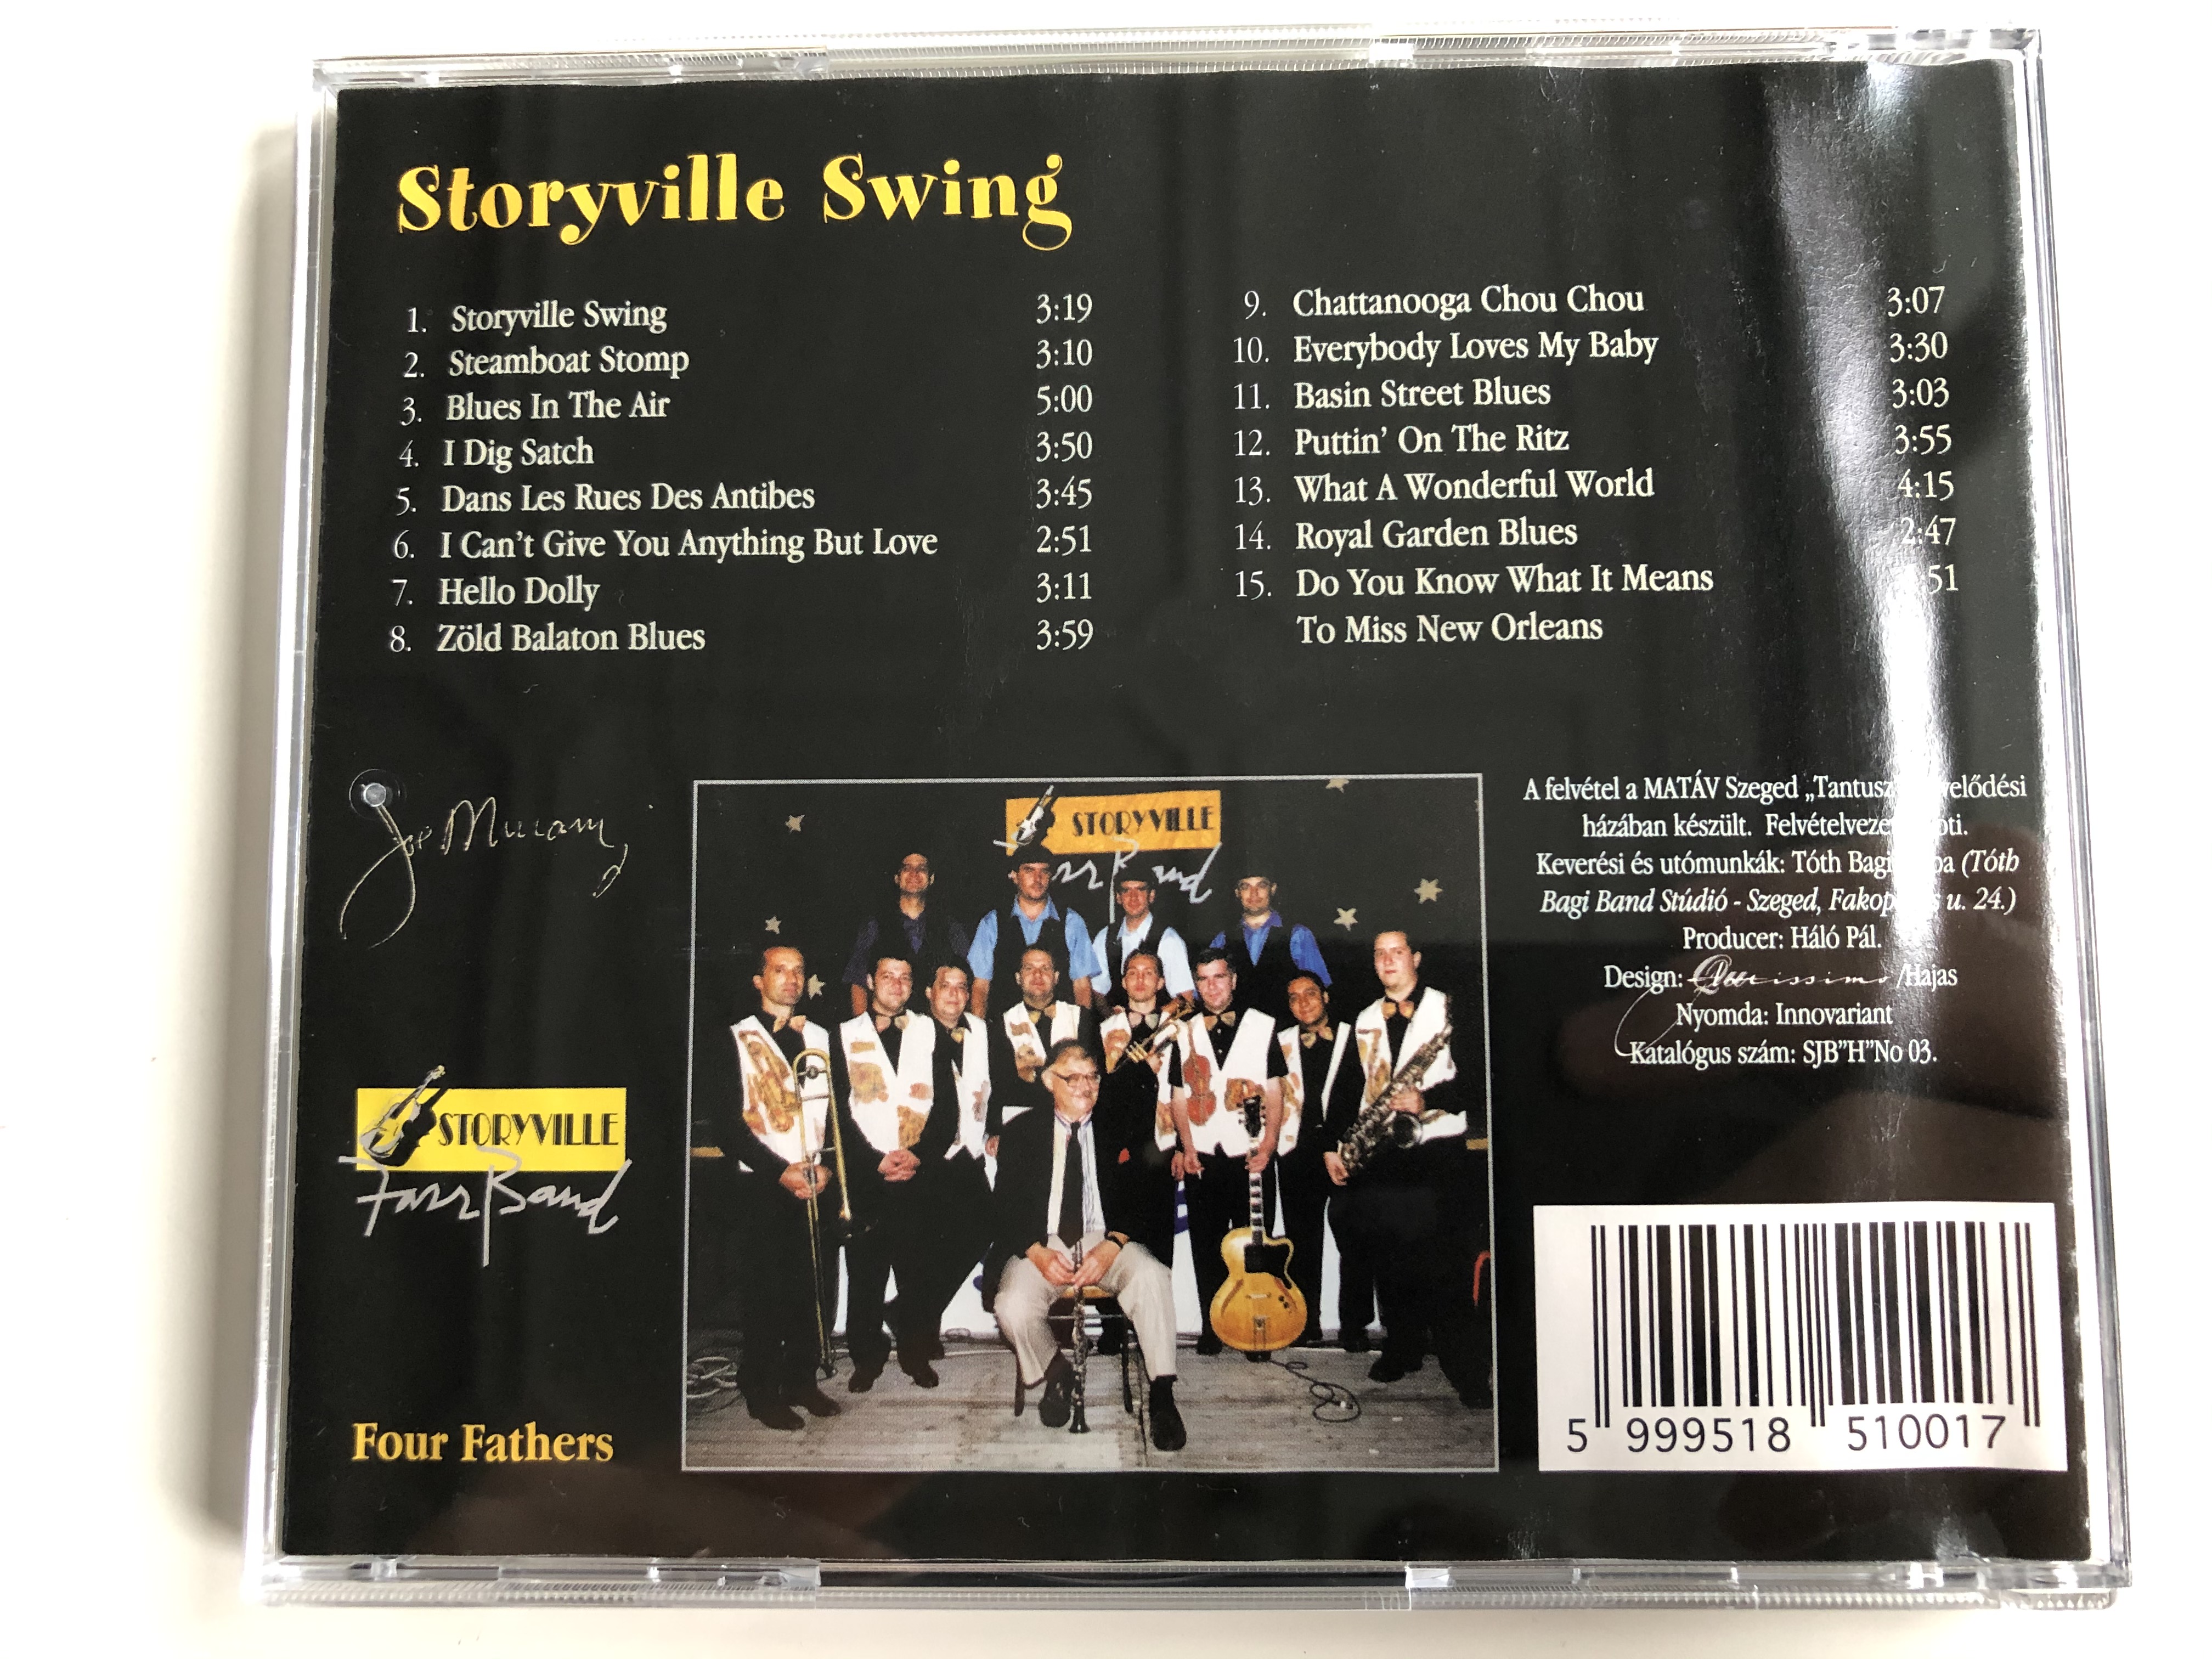 joe-muranyi-storyville-jazz-band-storyville-swing-storyville-jazz-band-audio-cd-1999-sjb-h-no-03-9-.jpg